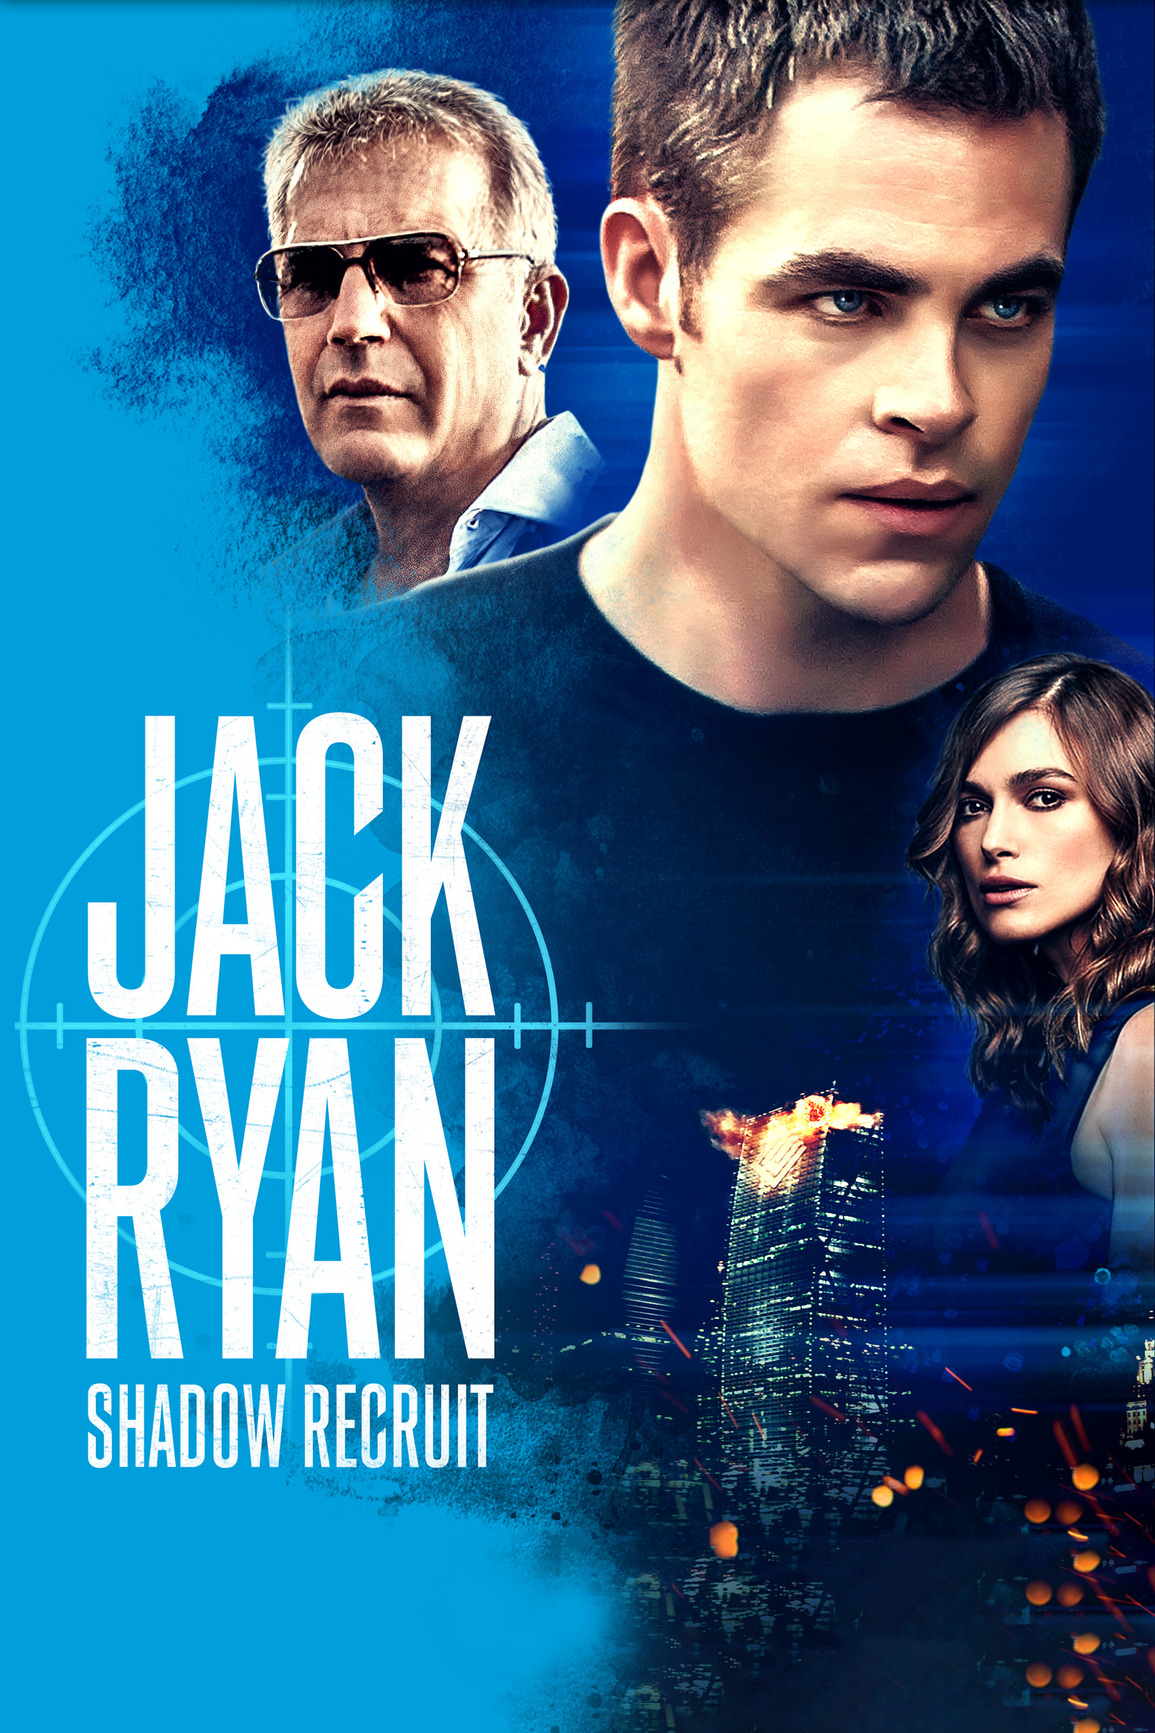 Jack Ryan Shadow Recruit 2014 Hindi Dubbed Full Movie download full movie